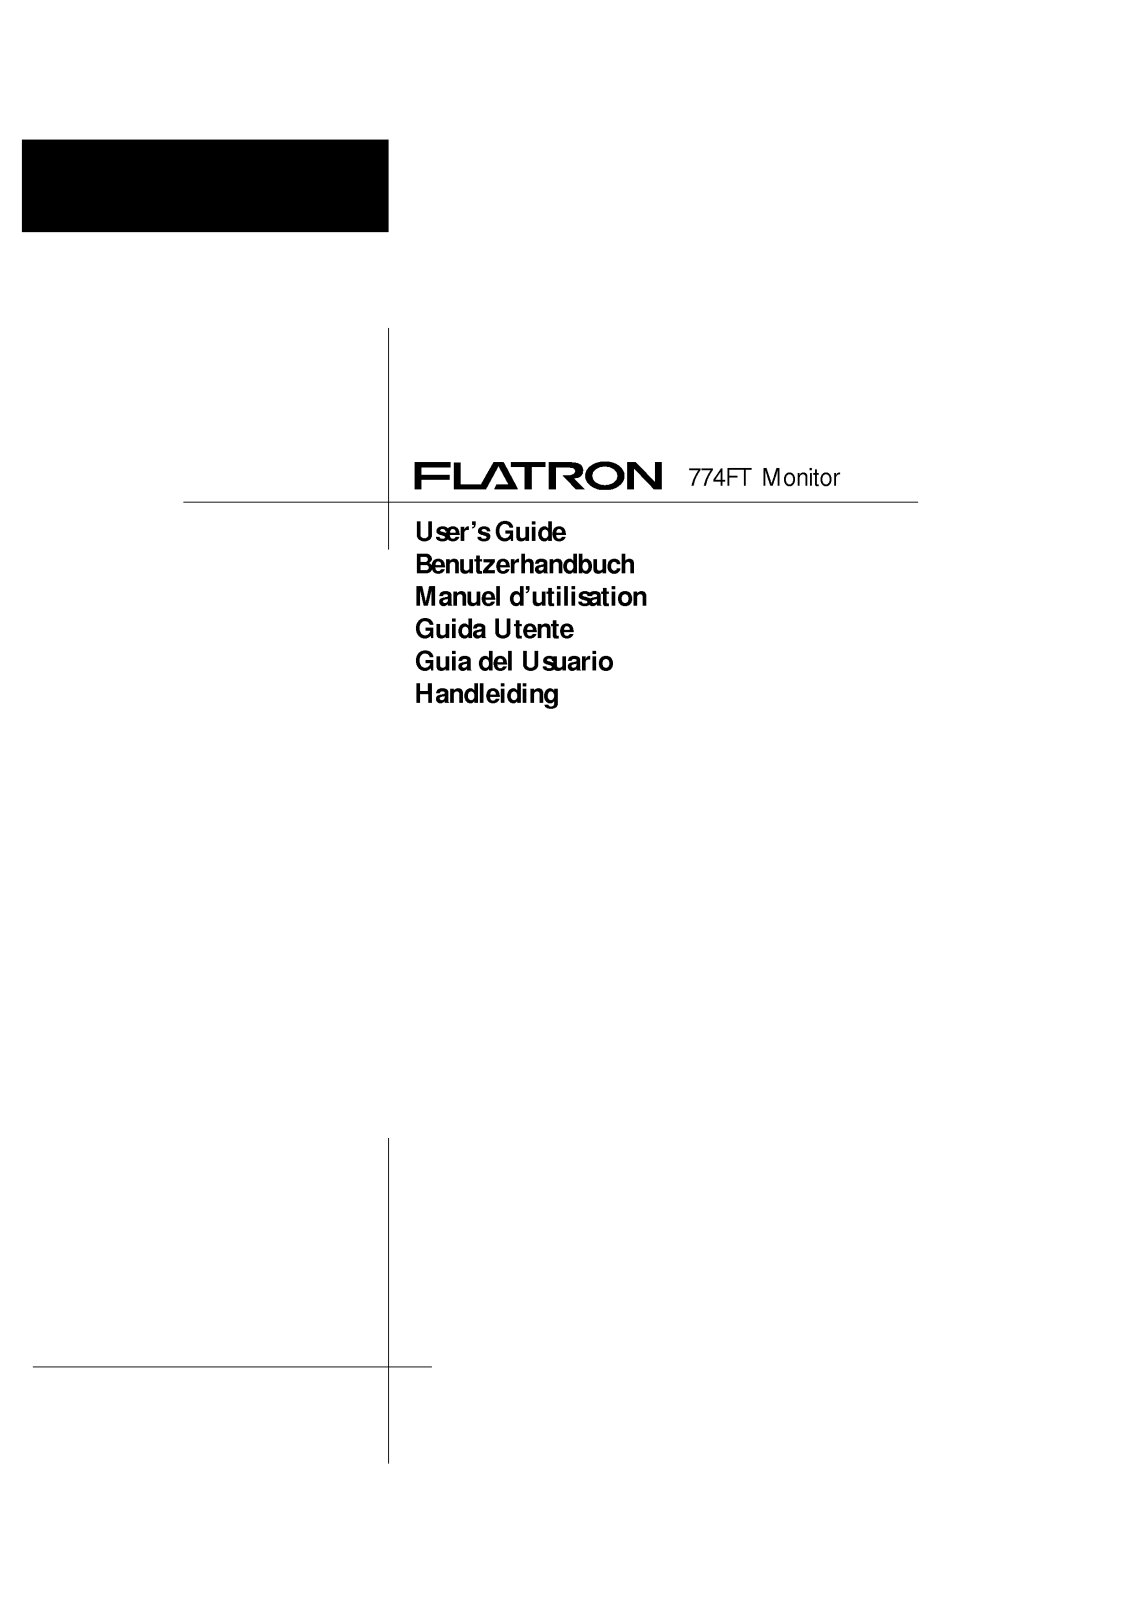 LG FLATRON 774FT-FB774BC-ULTRA, FLATRON 774FT-FB774BC User Manual